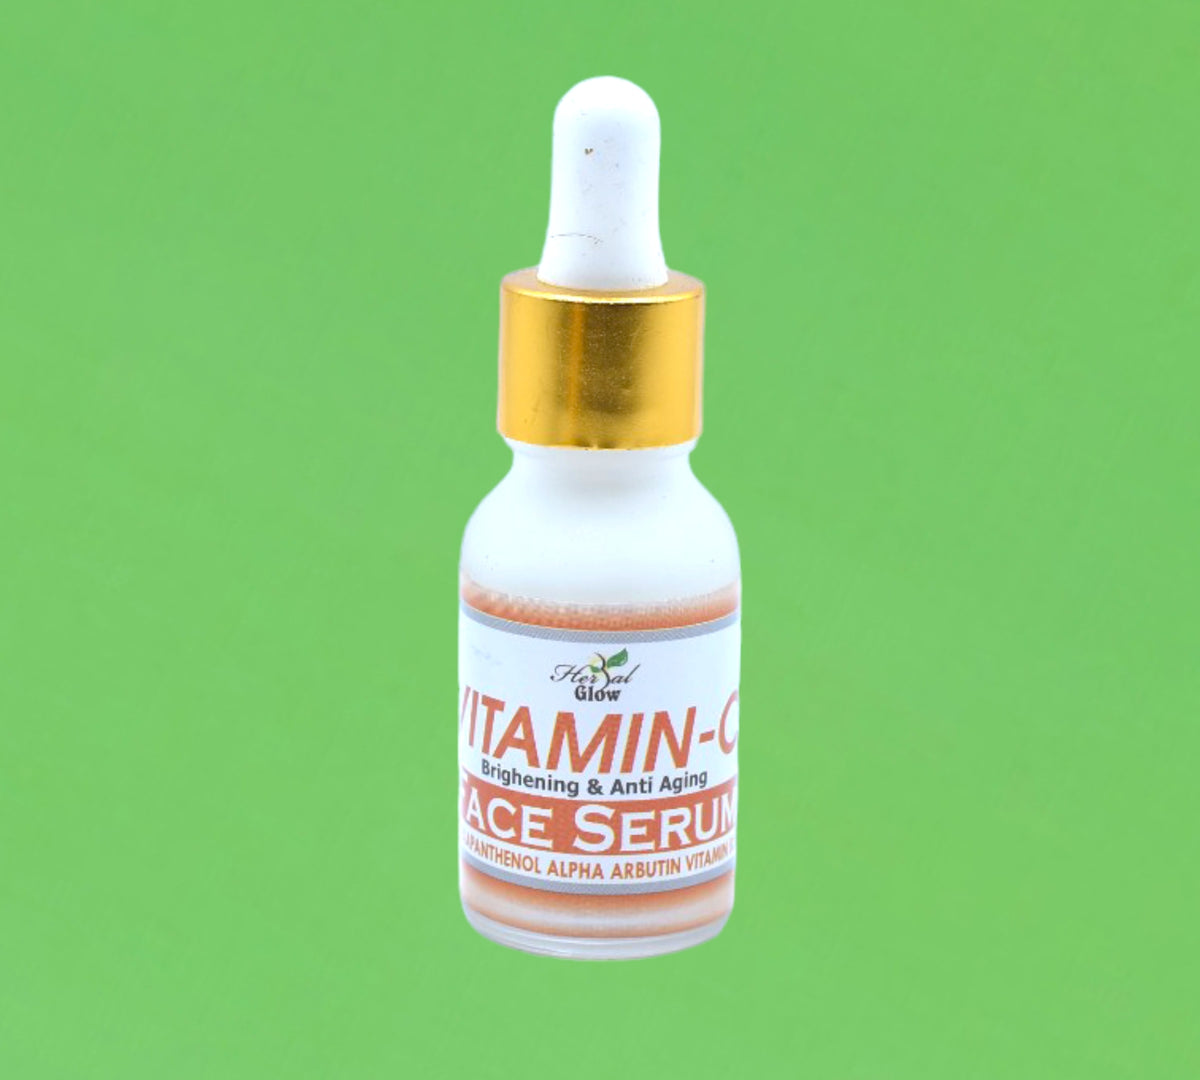 Vitamin C Face whitening Serum - Illuminate Your Skin's Natural Radiance by Herbal Glow